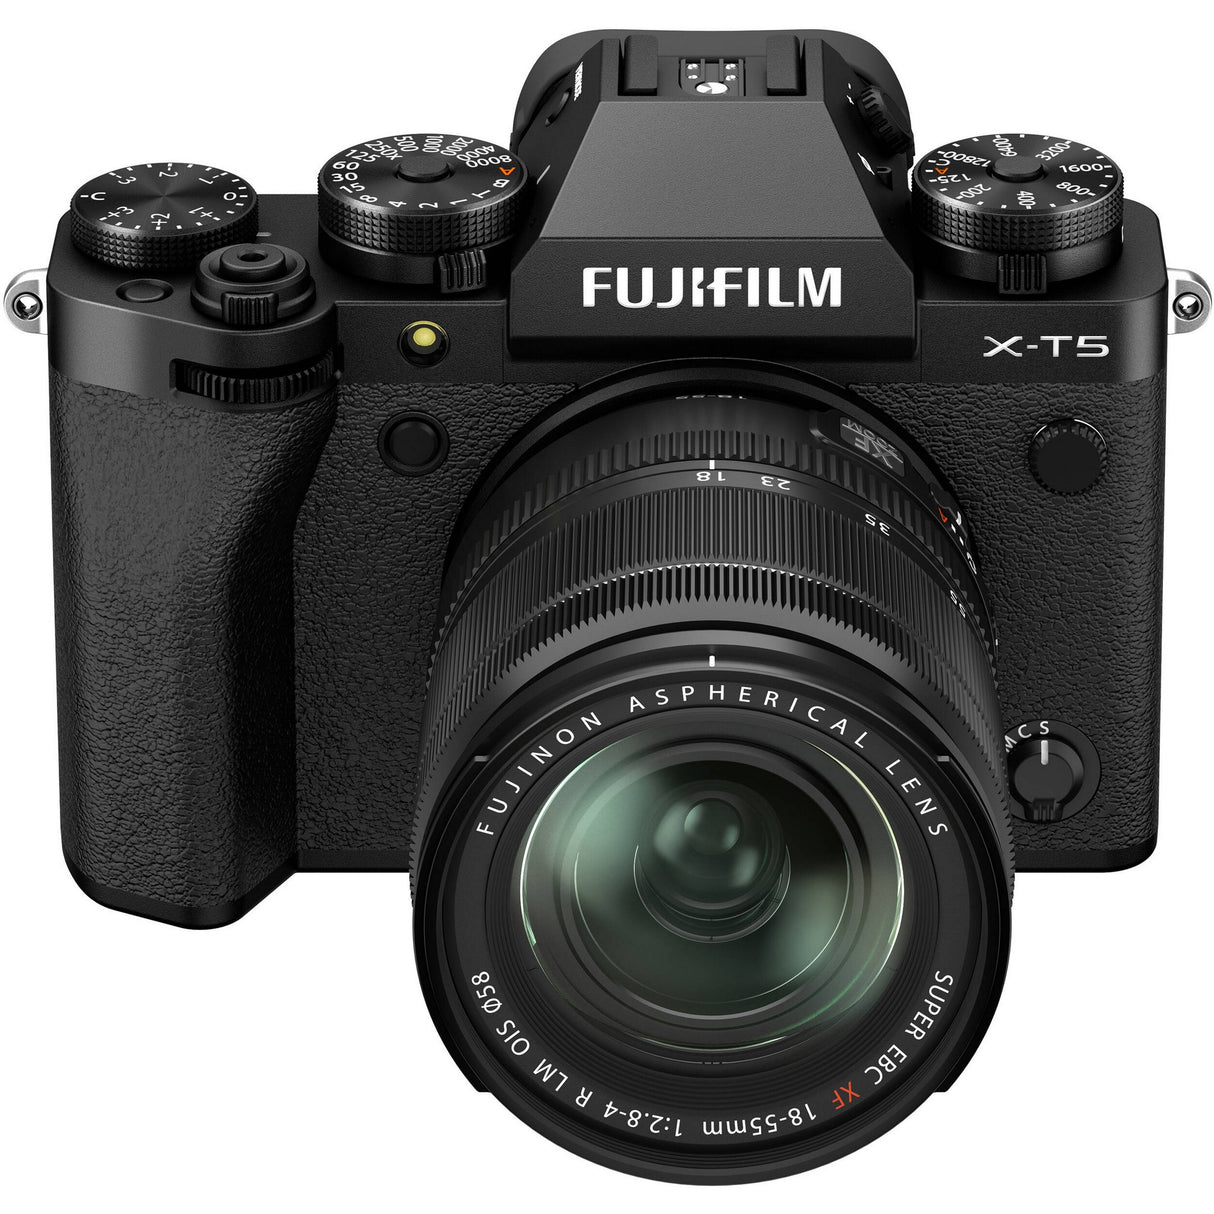 Fujifilm X-T5 Mirrorless Camera with 18-55mm Lens, Black